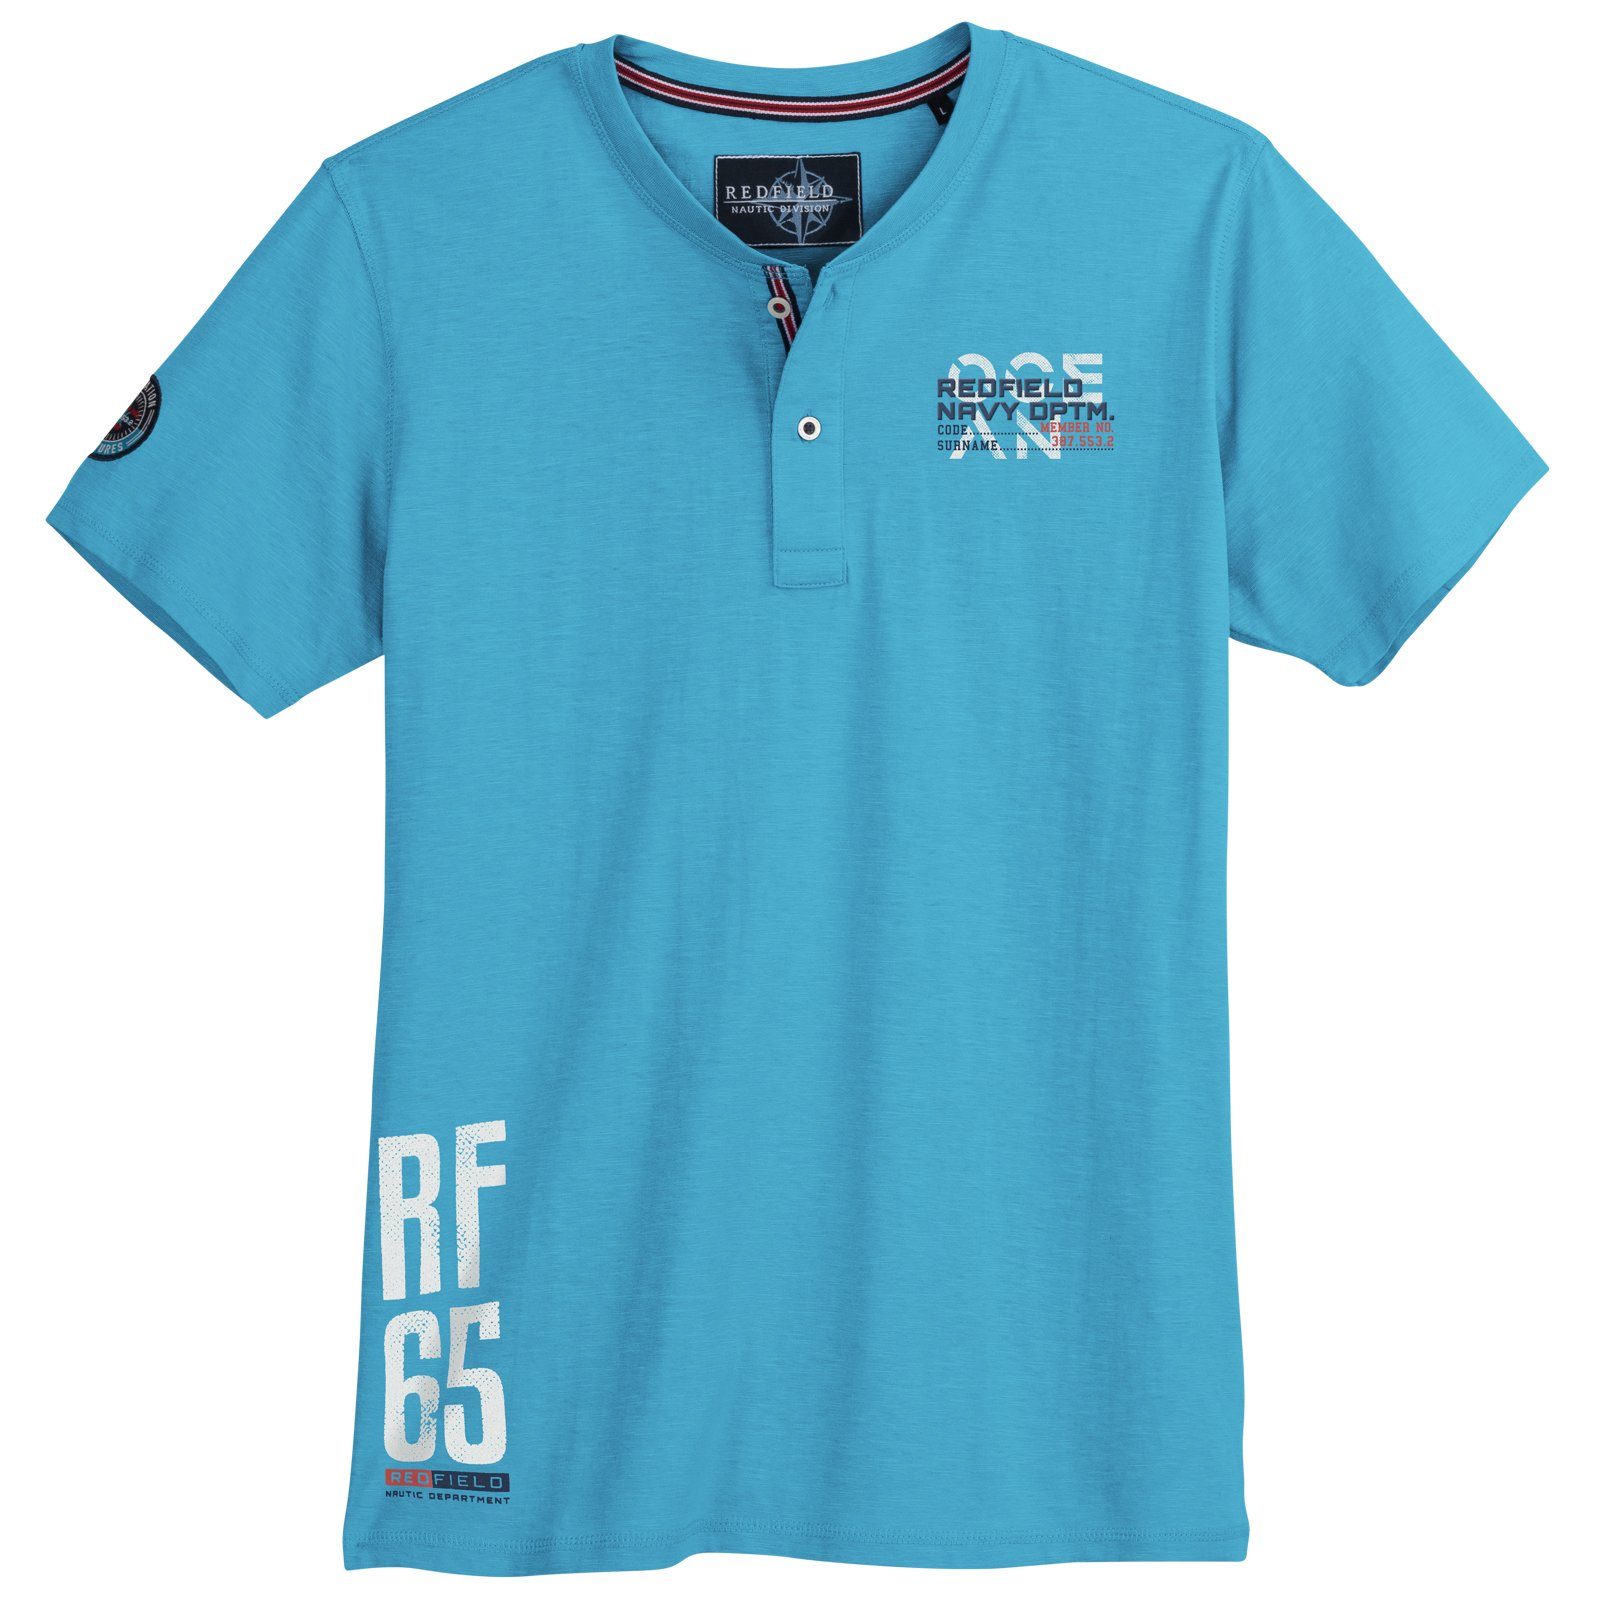 Große Redfield T-Shirt Größen maritim redfield azurblau Herren Print-Shirt Serafino